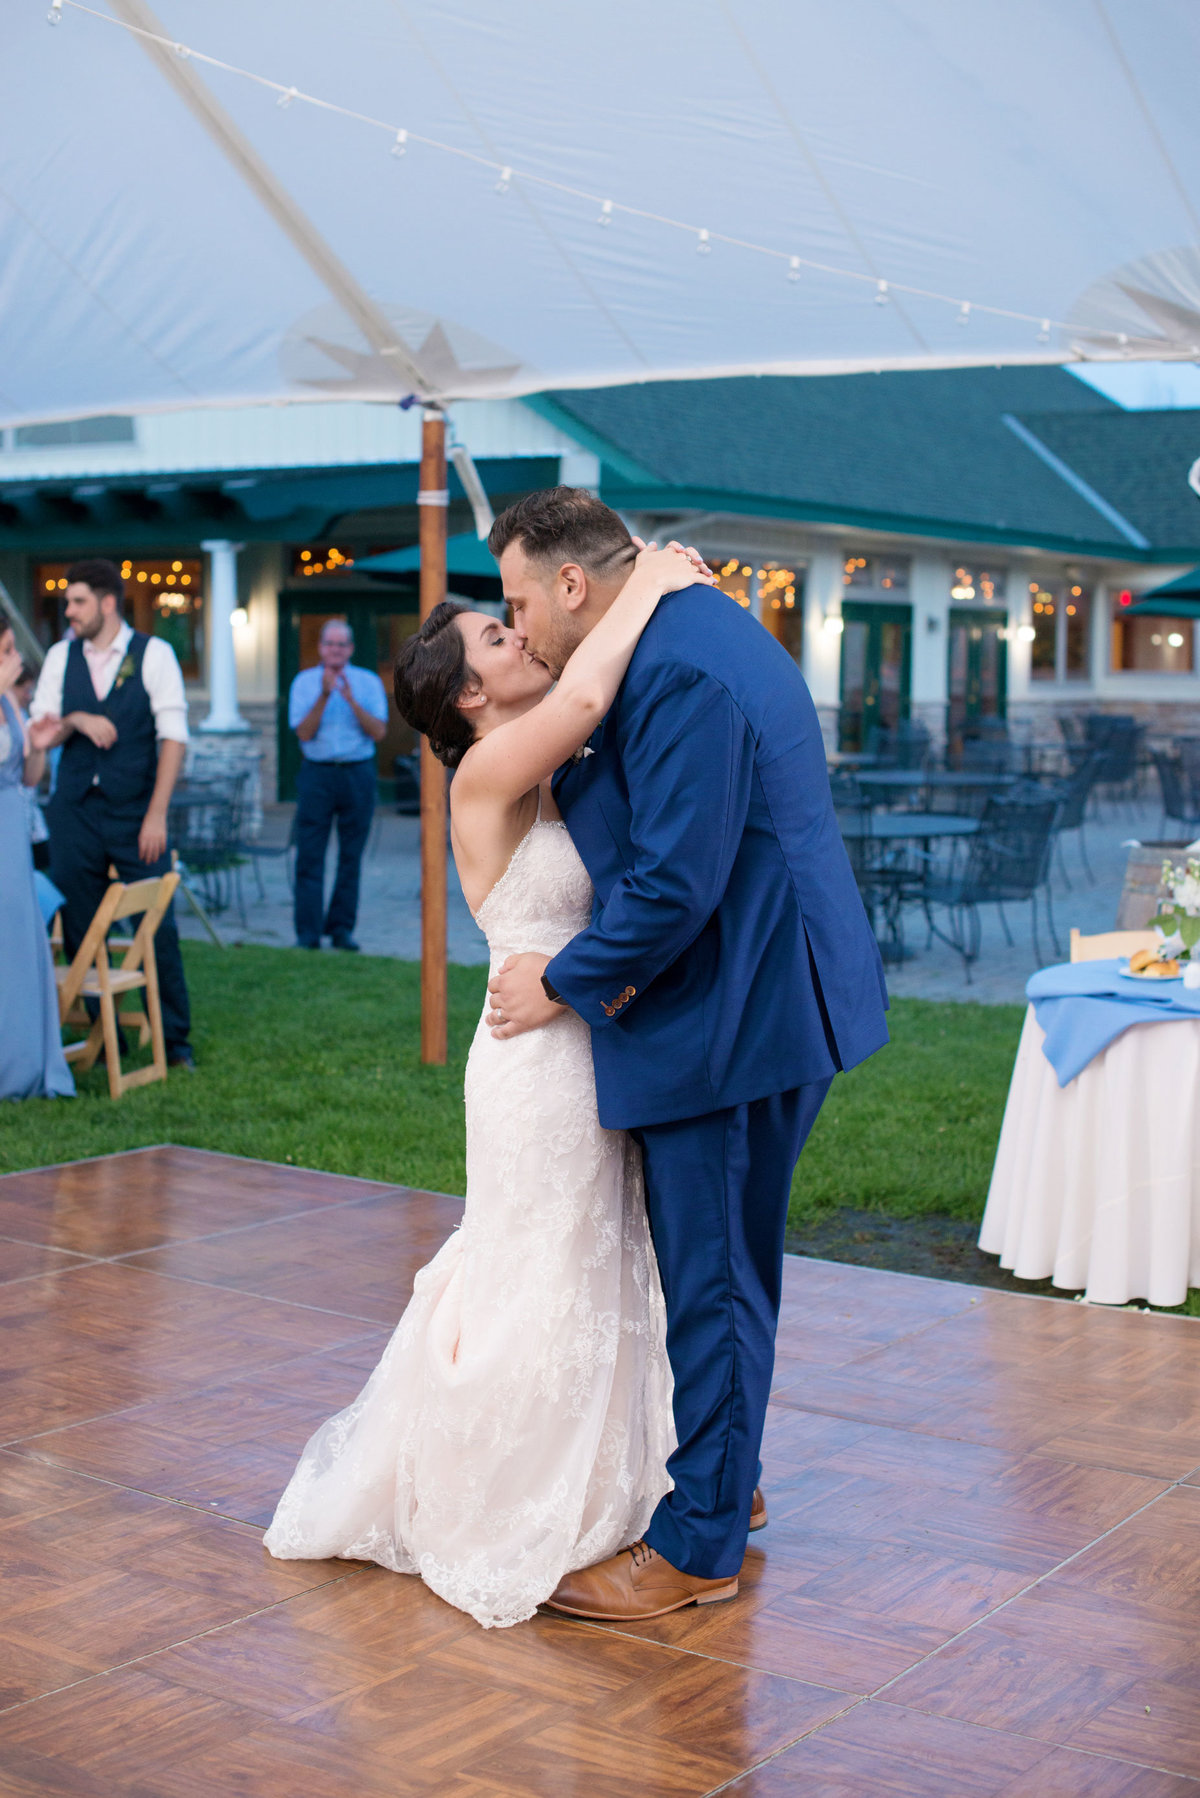 Bride and groom's first dance at Duckwalk Vineyards